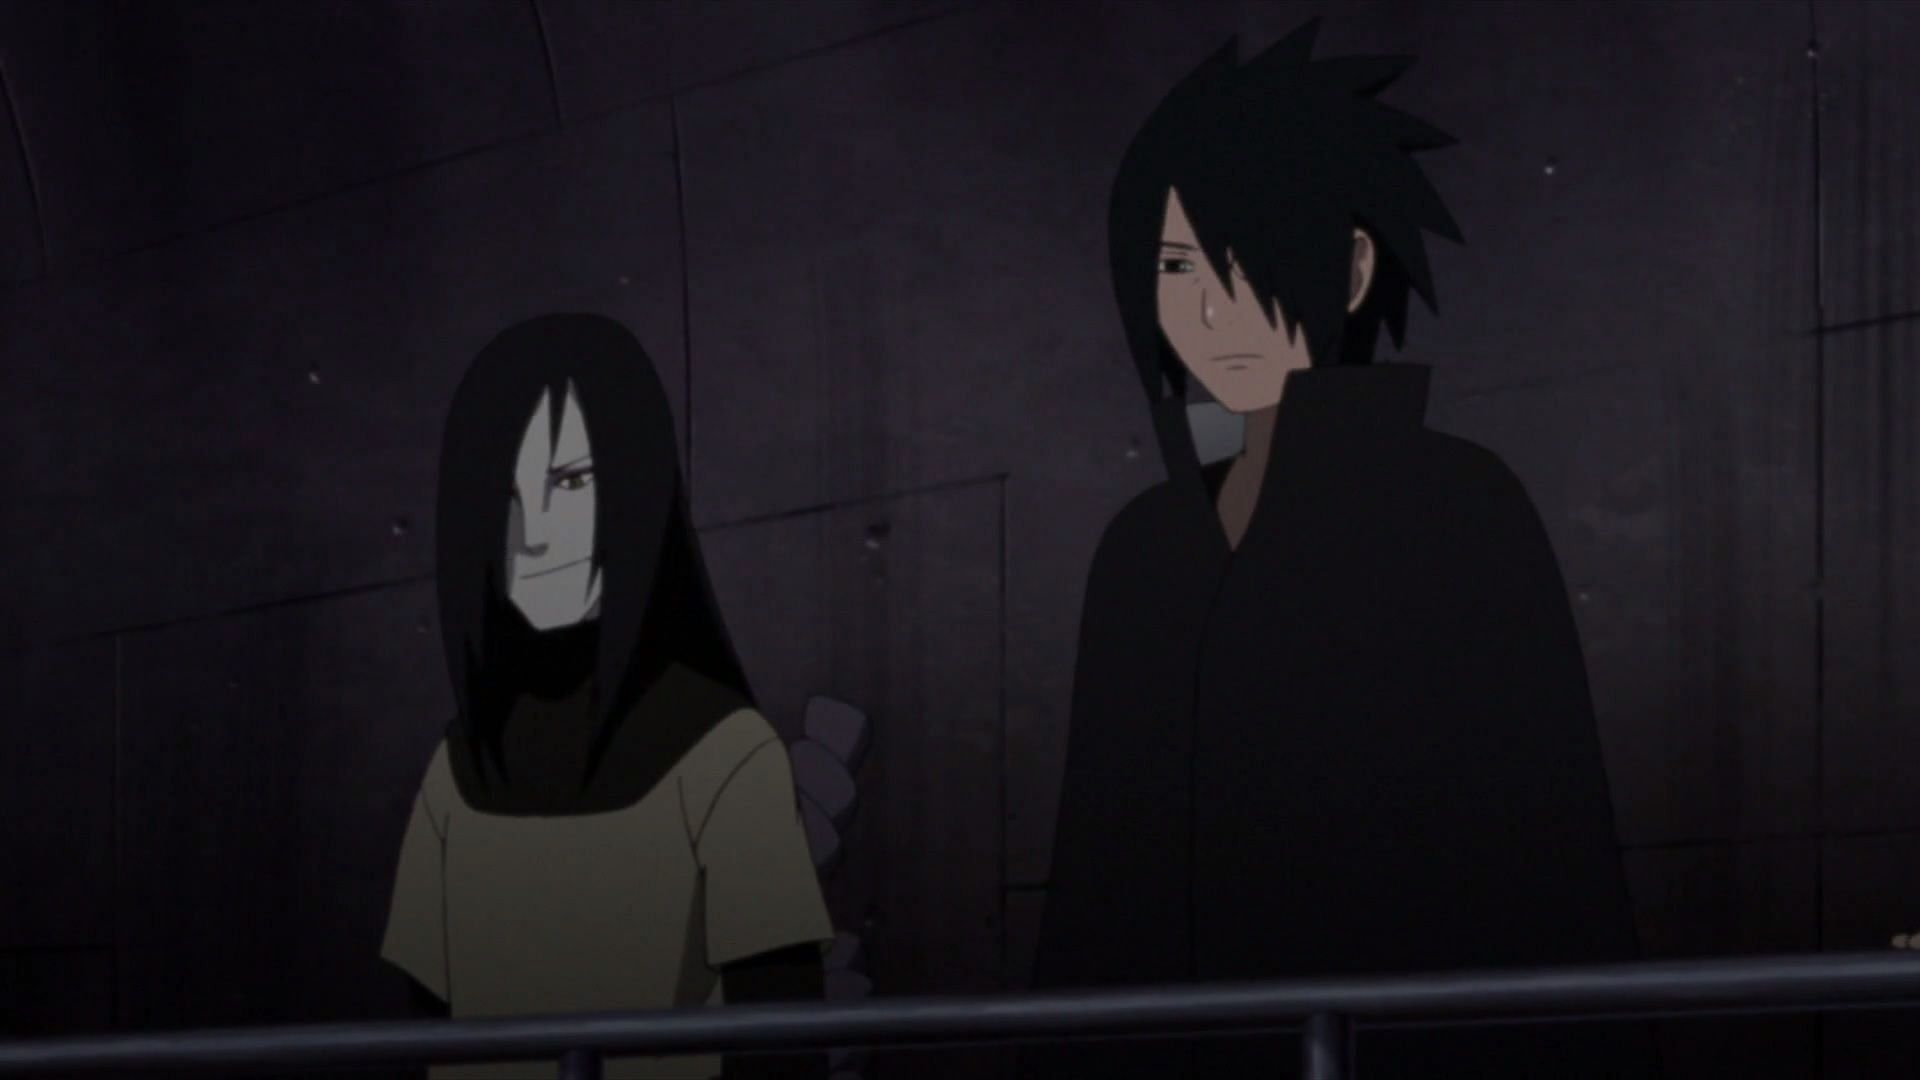 Orochimaru (left) and Sasuke (right) as seen in the series&#039; anime (Image via Studio Pierrot)